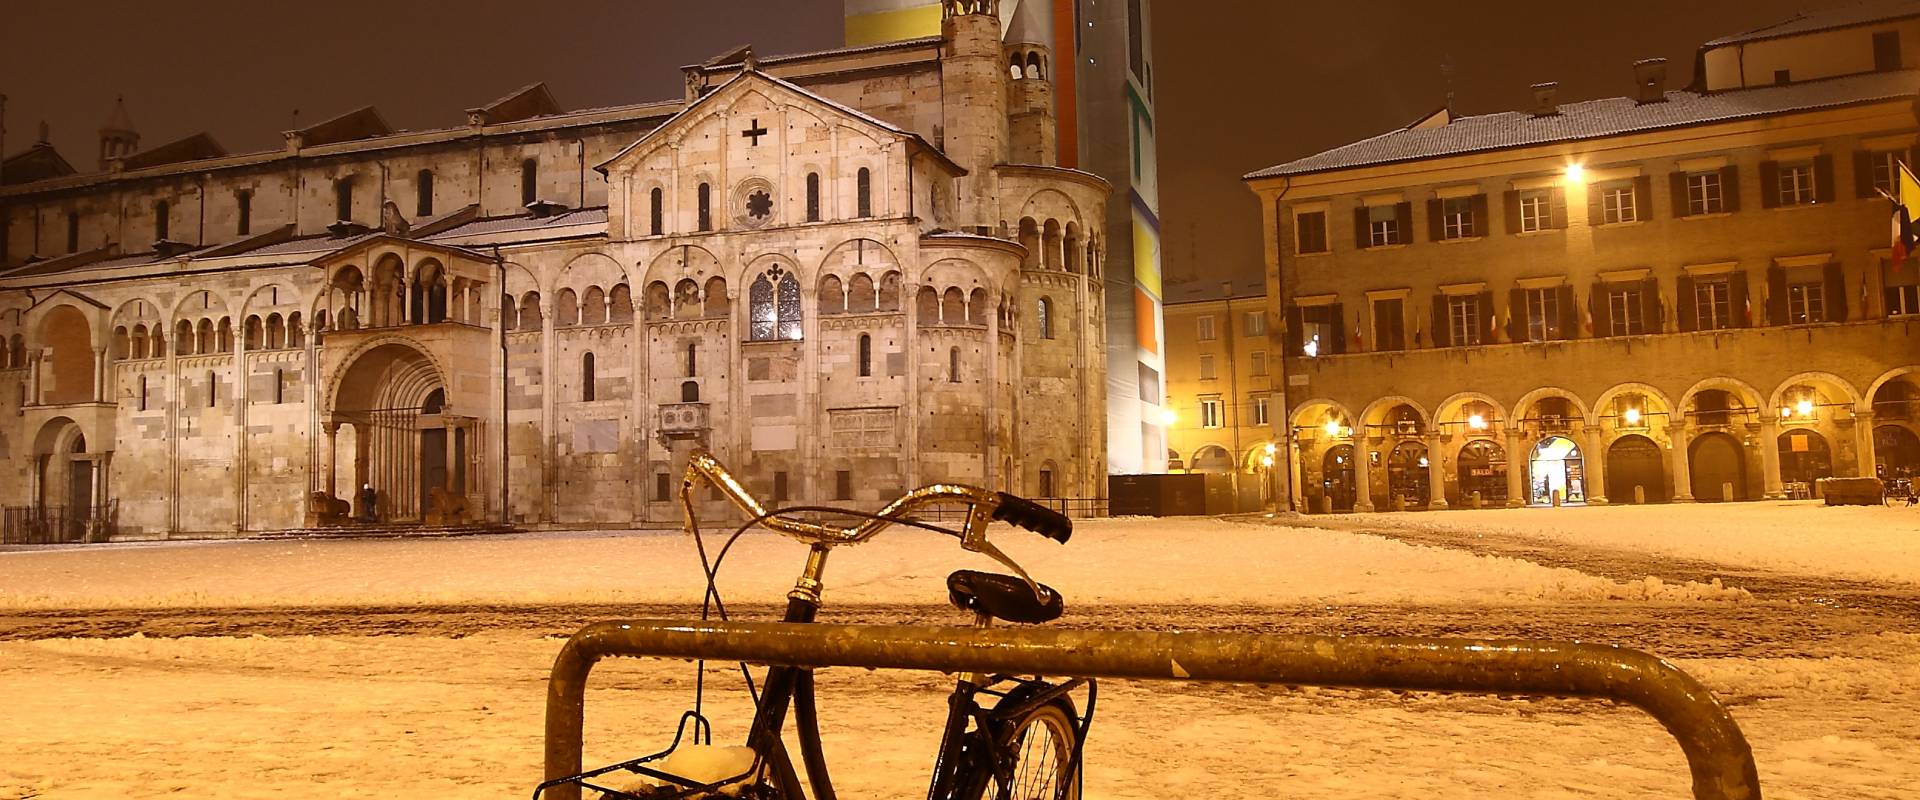 Neve in Piazza Grande Duomo e Ghirlandina coperta dal Telo del Paladino foto di Giandobert